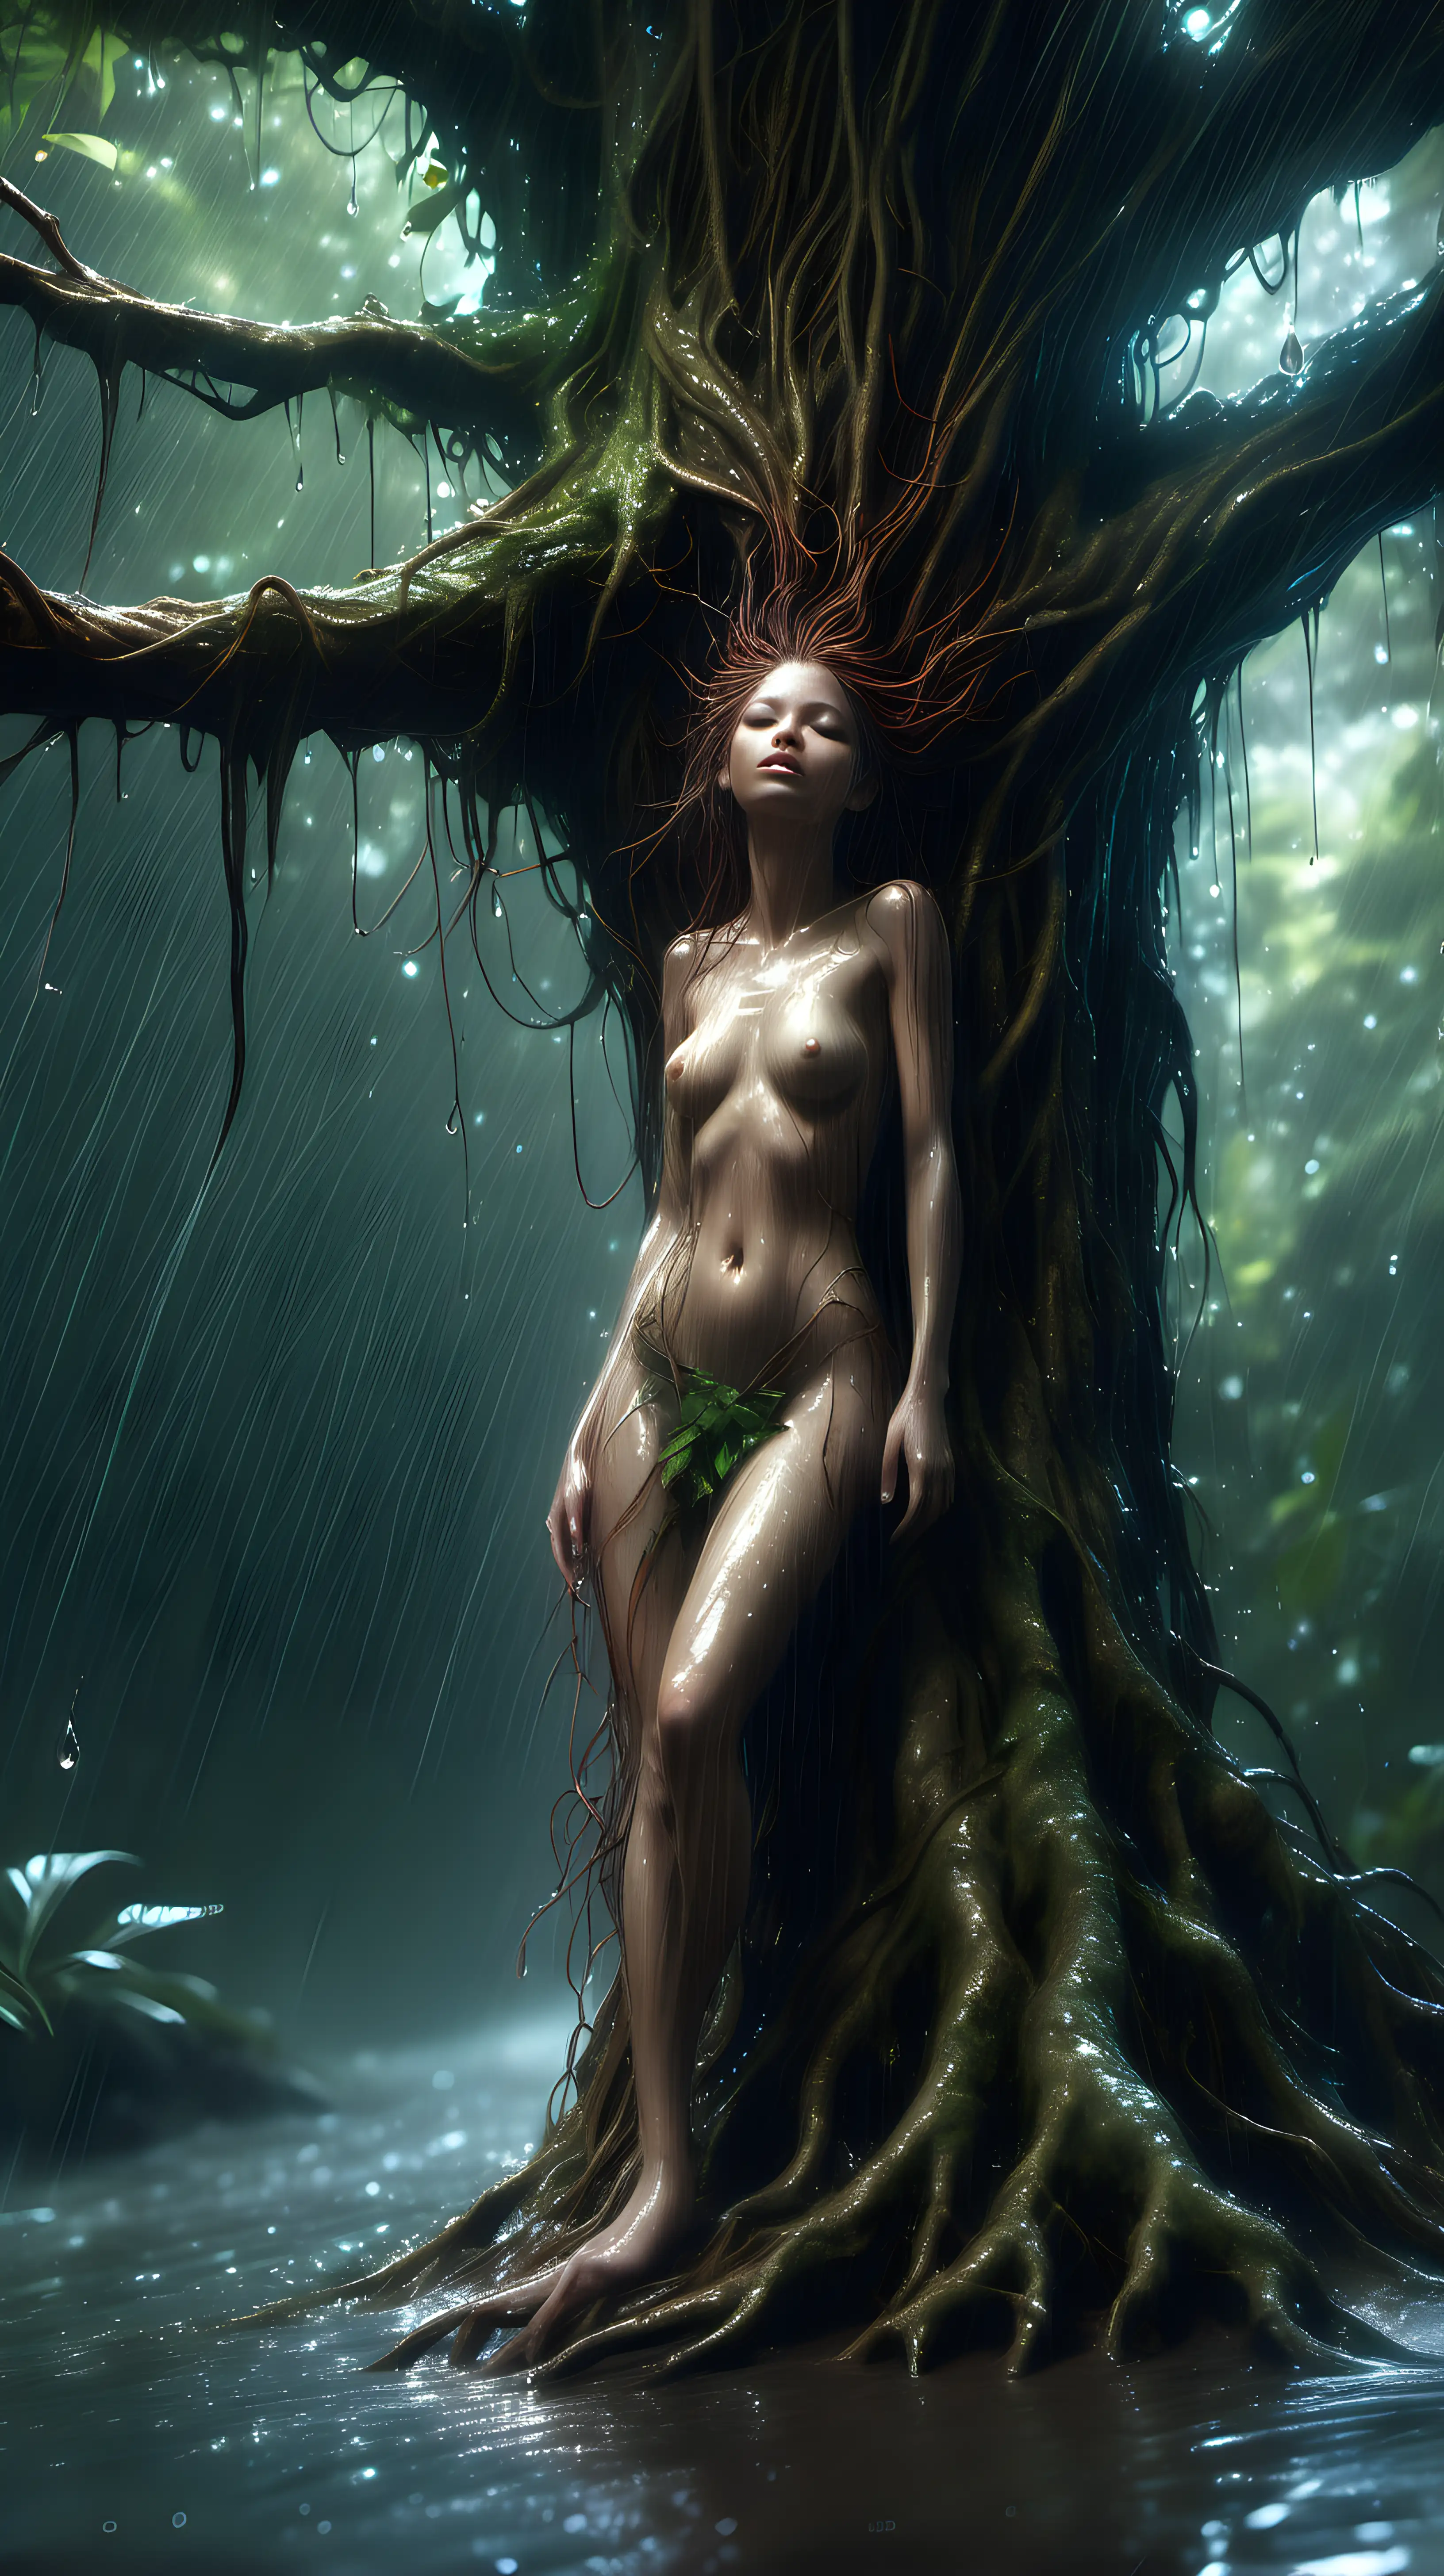 Enchanting Rainforest Tree Spirit Soaked in Raindrops